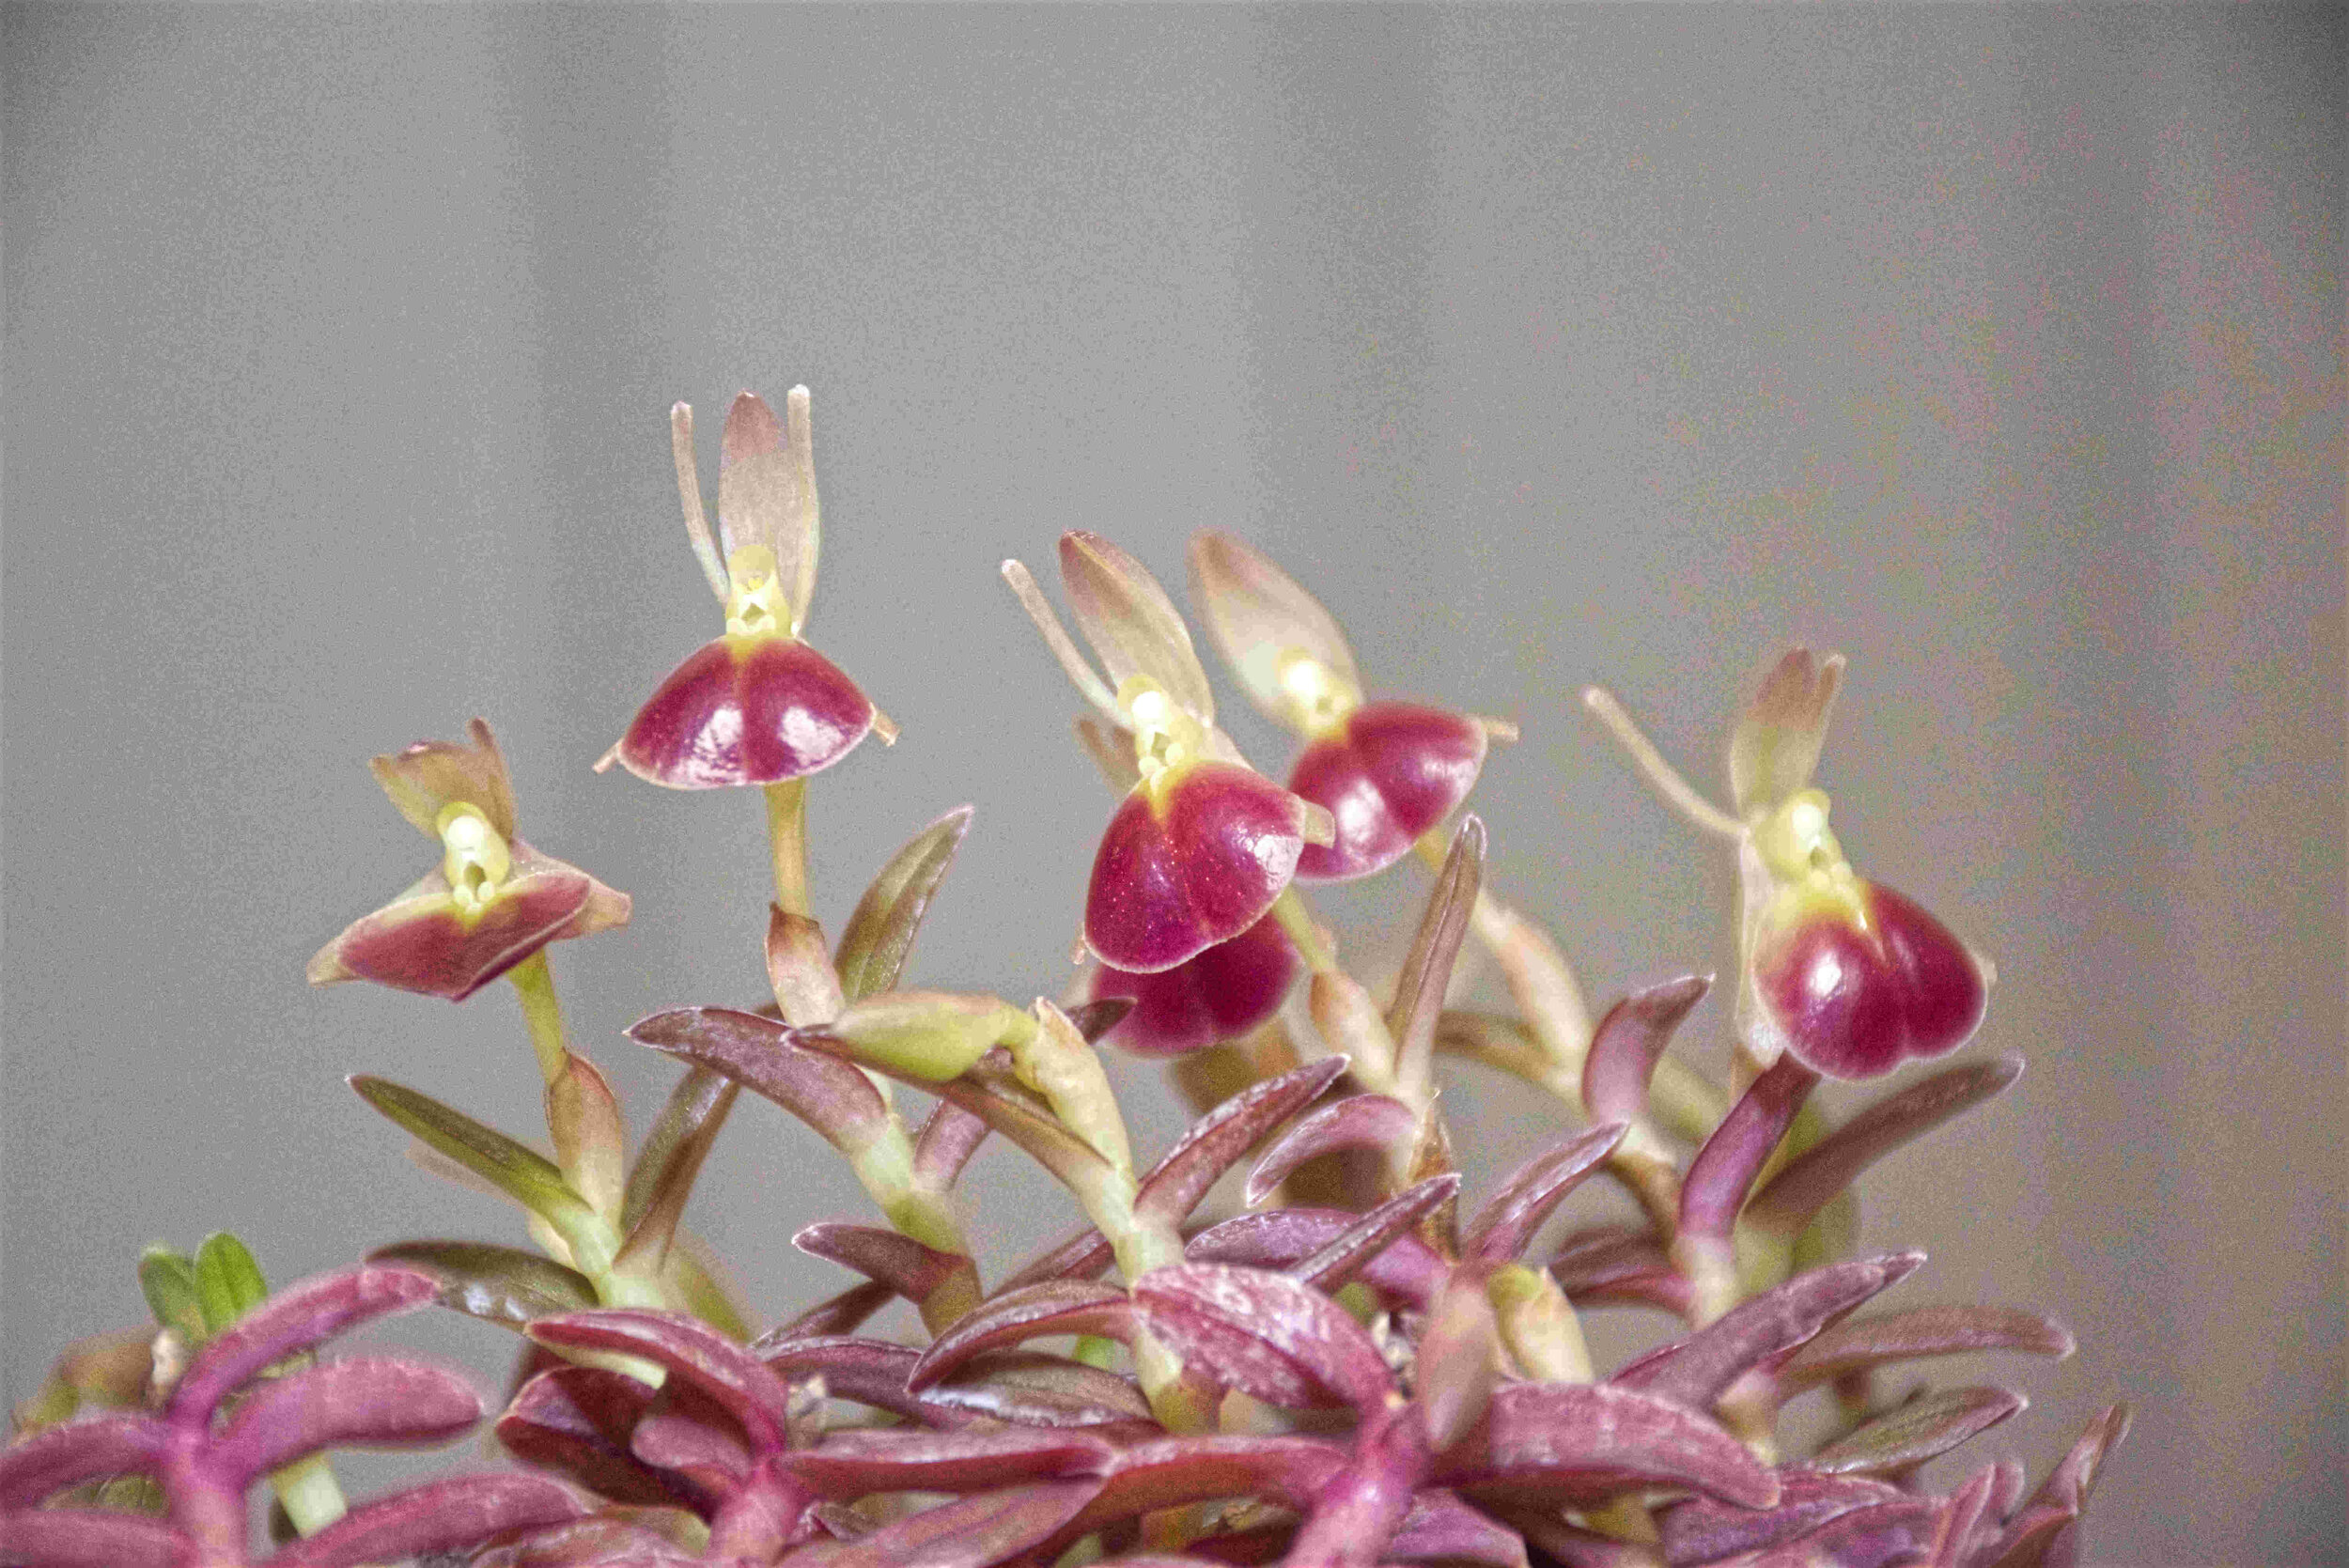 Epidendrum peperomia (porpax)